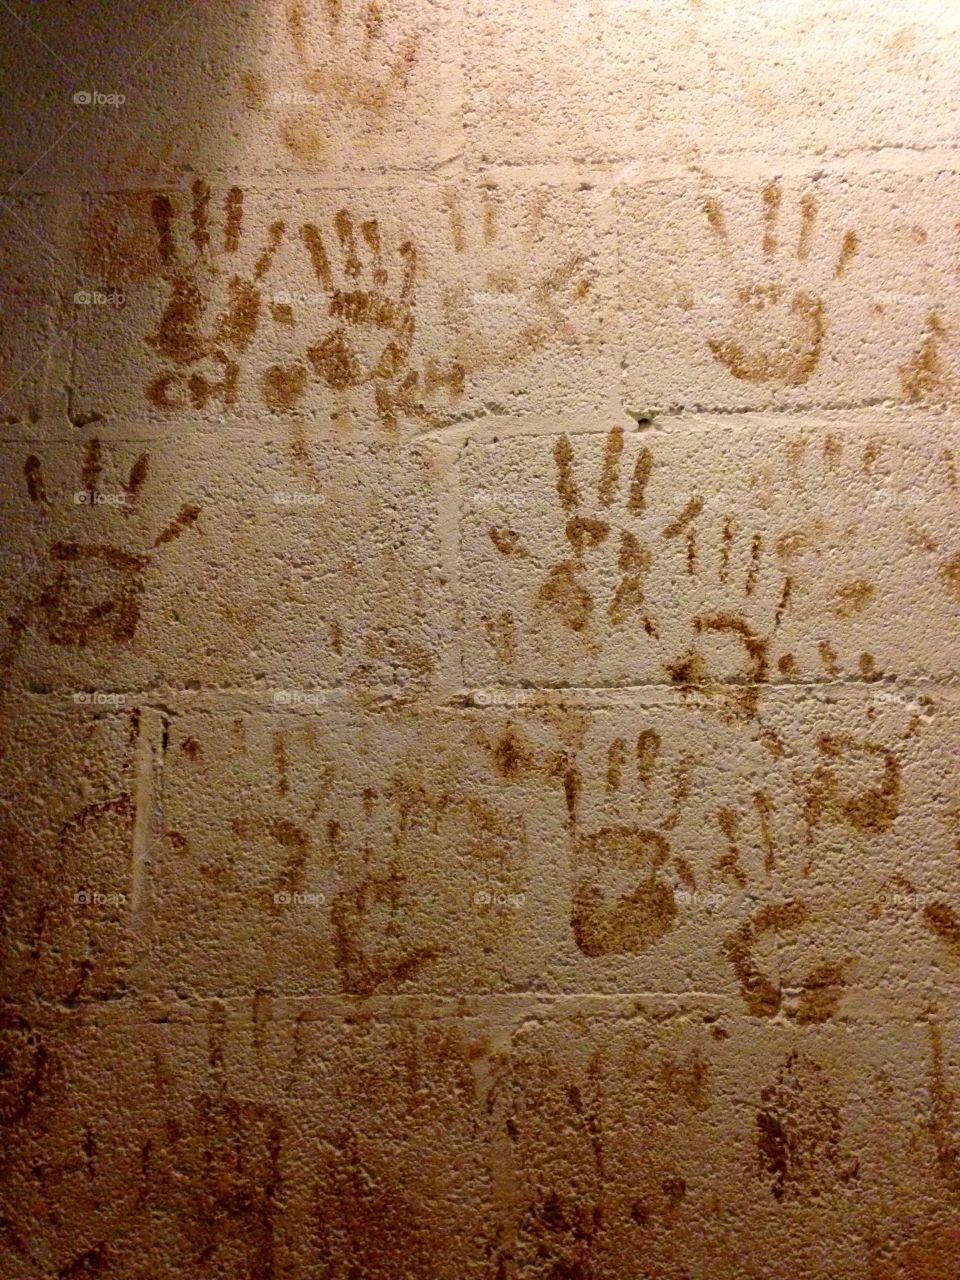 Clay handprints. 